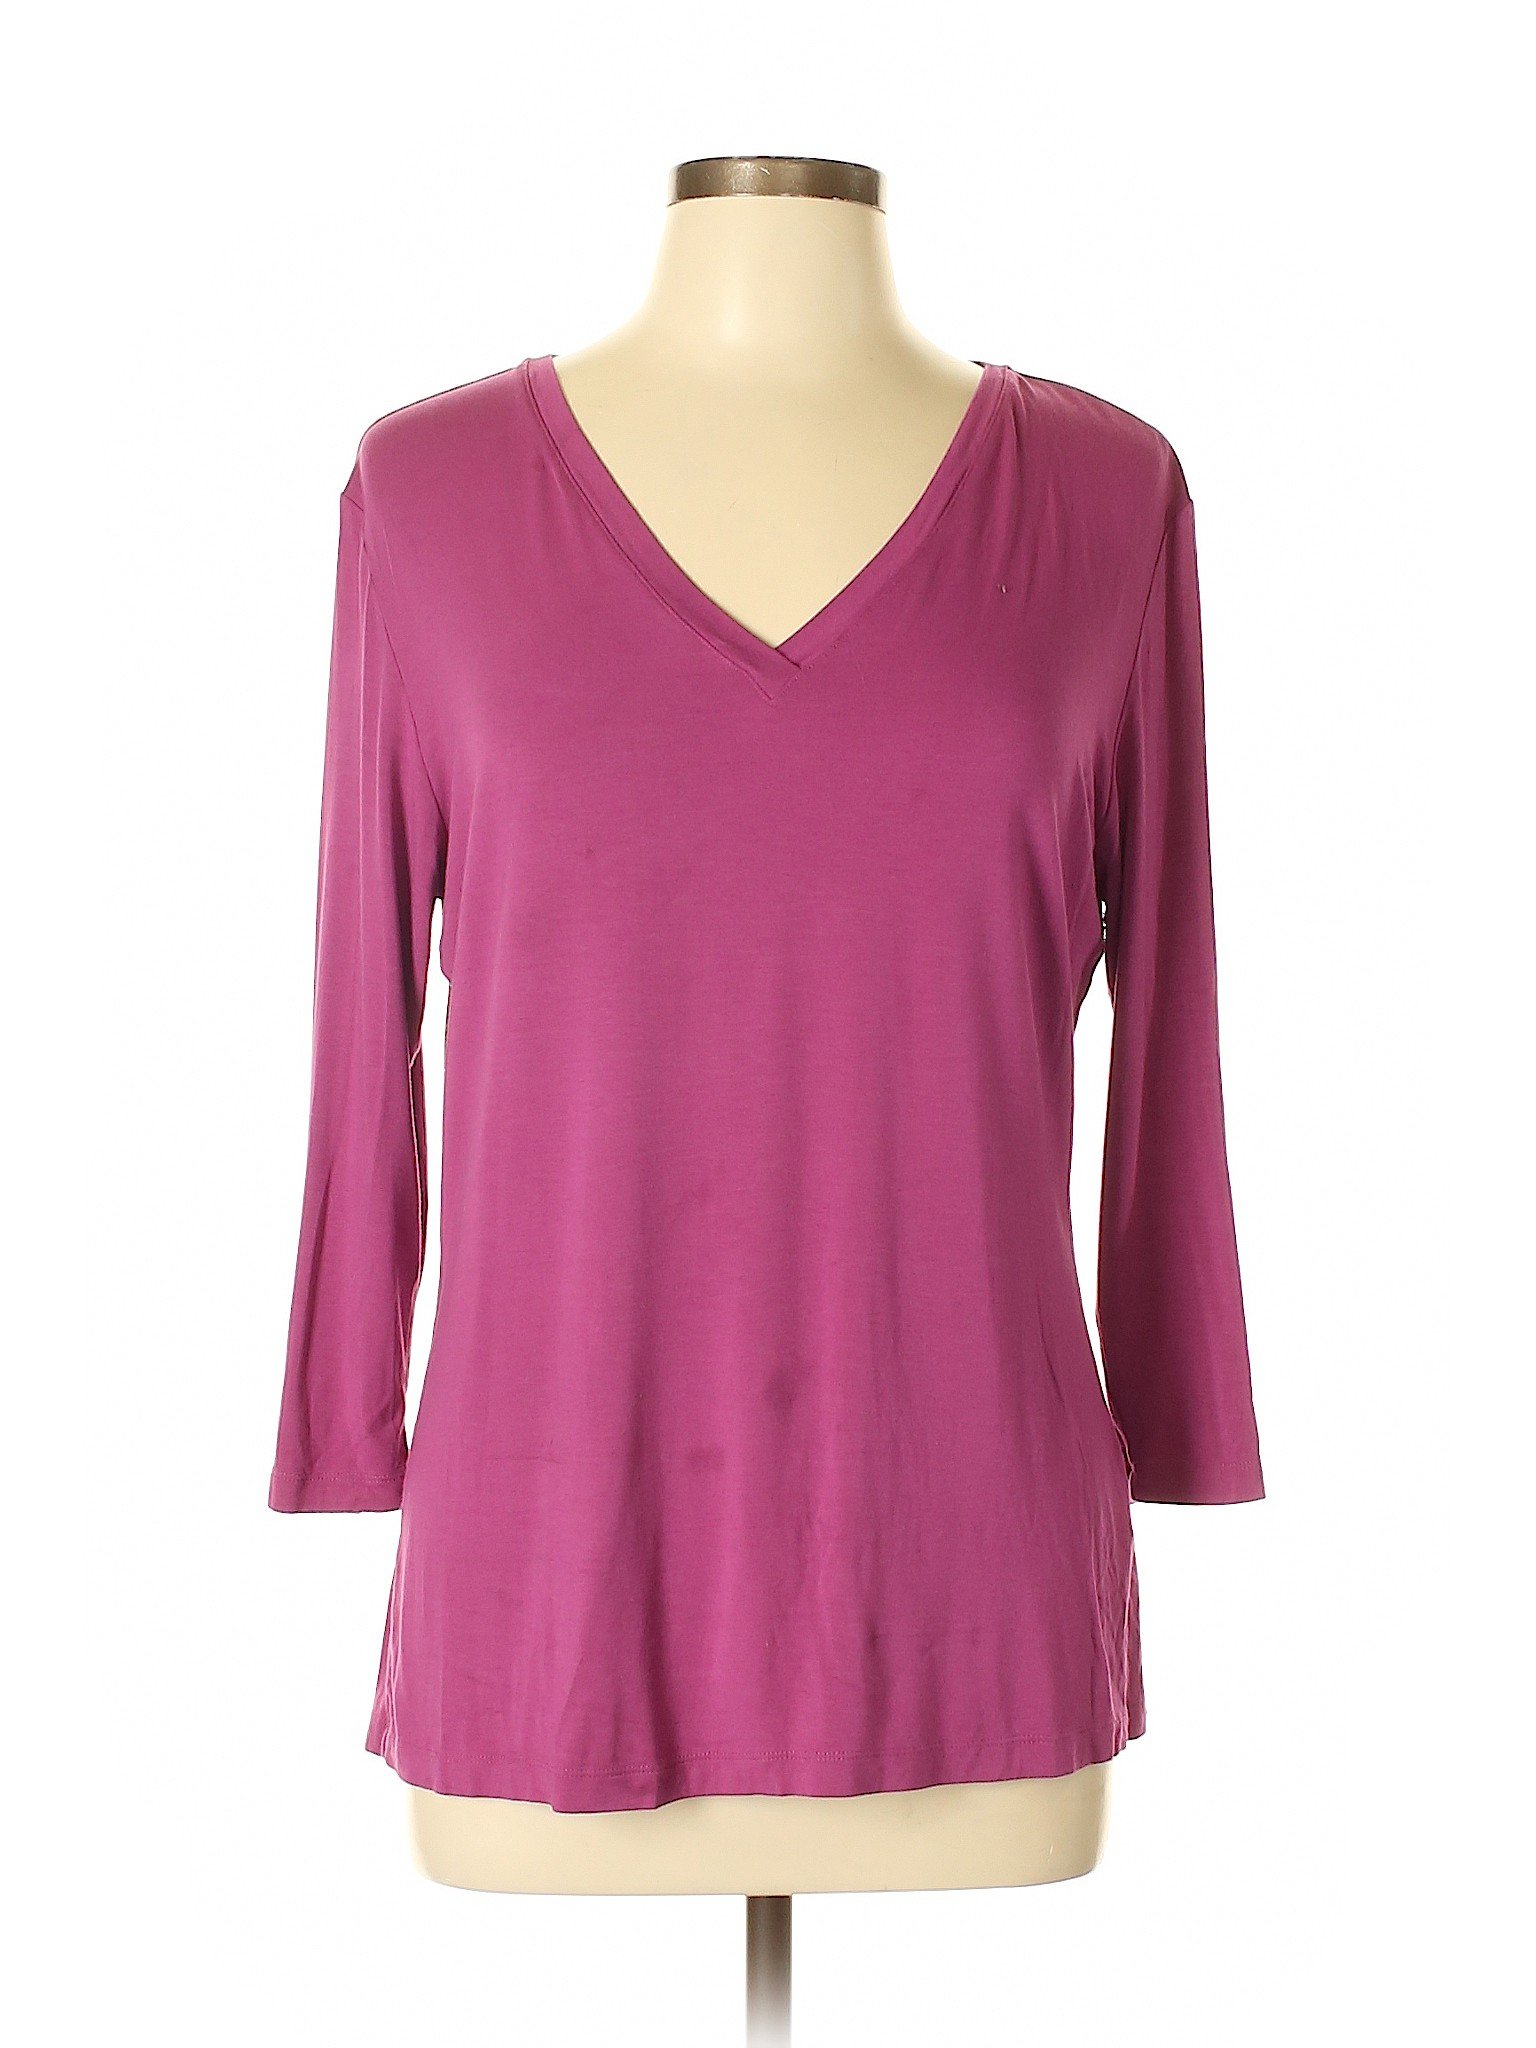 Doncaster Women Purple 3/4 Sleeve T-Shirt L | eBay